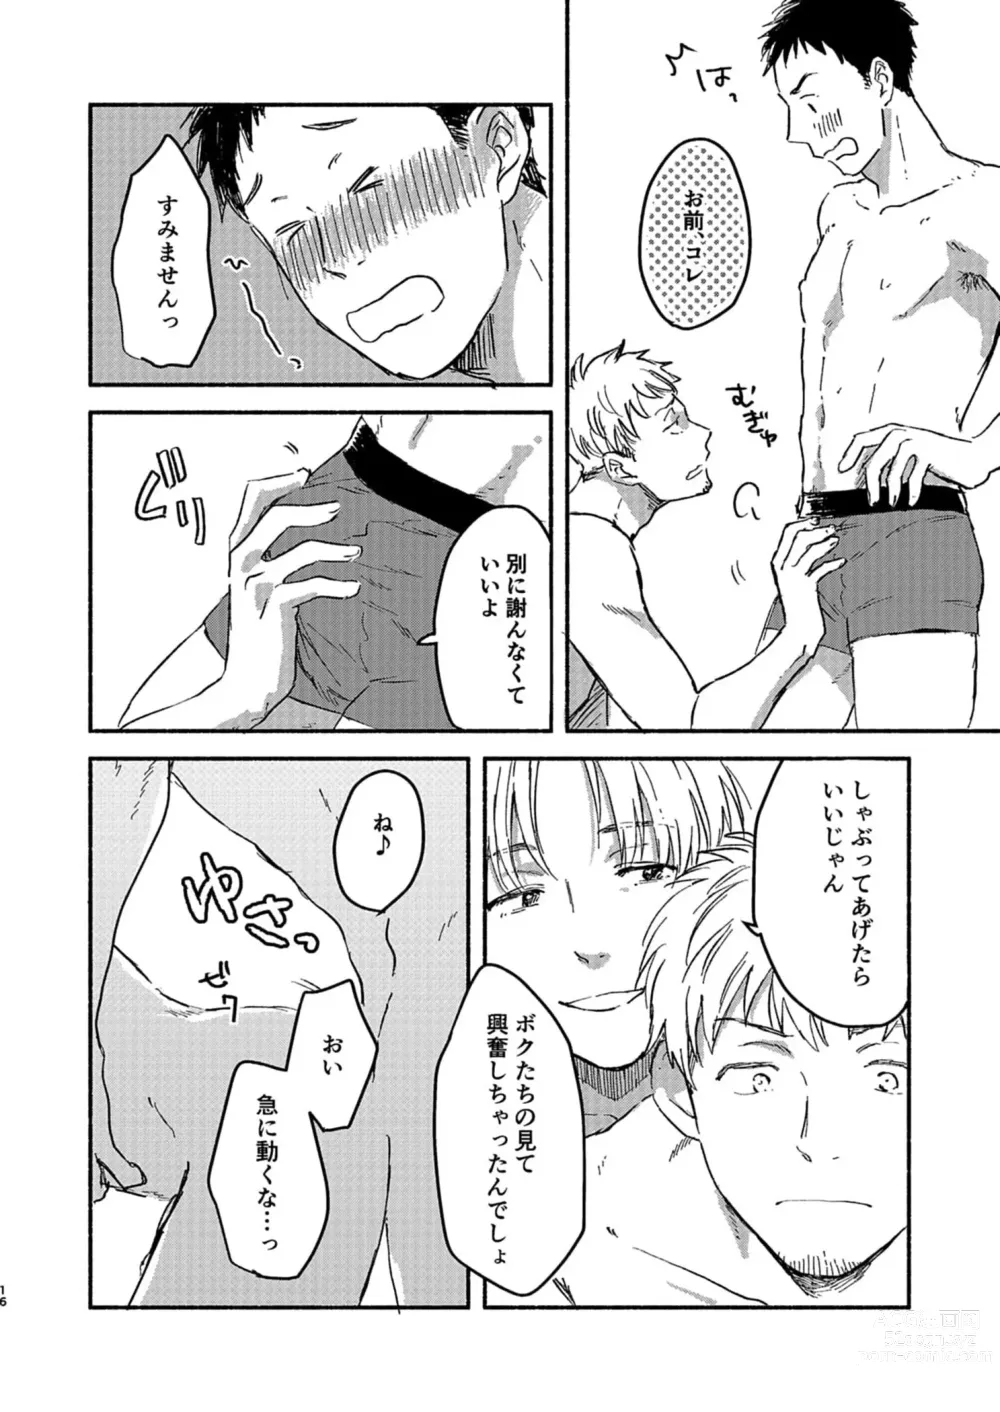 Page 16 of doujinshi Toaru GayVi Seisaku Gaisha Staff no Shanai Renai Jijou - The internal love affairs of the staff of a certain gay video production company.